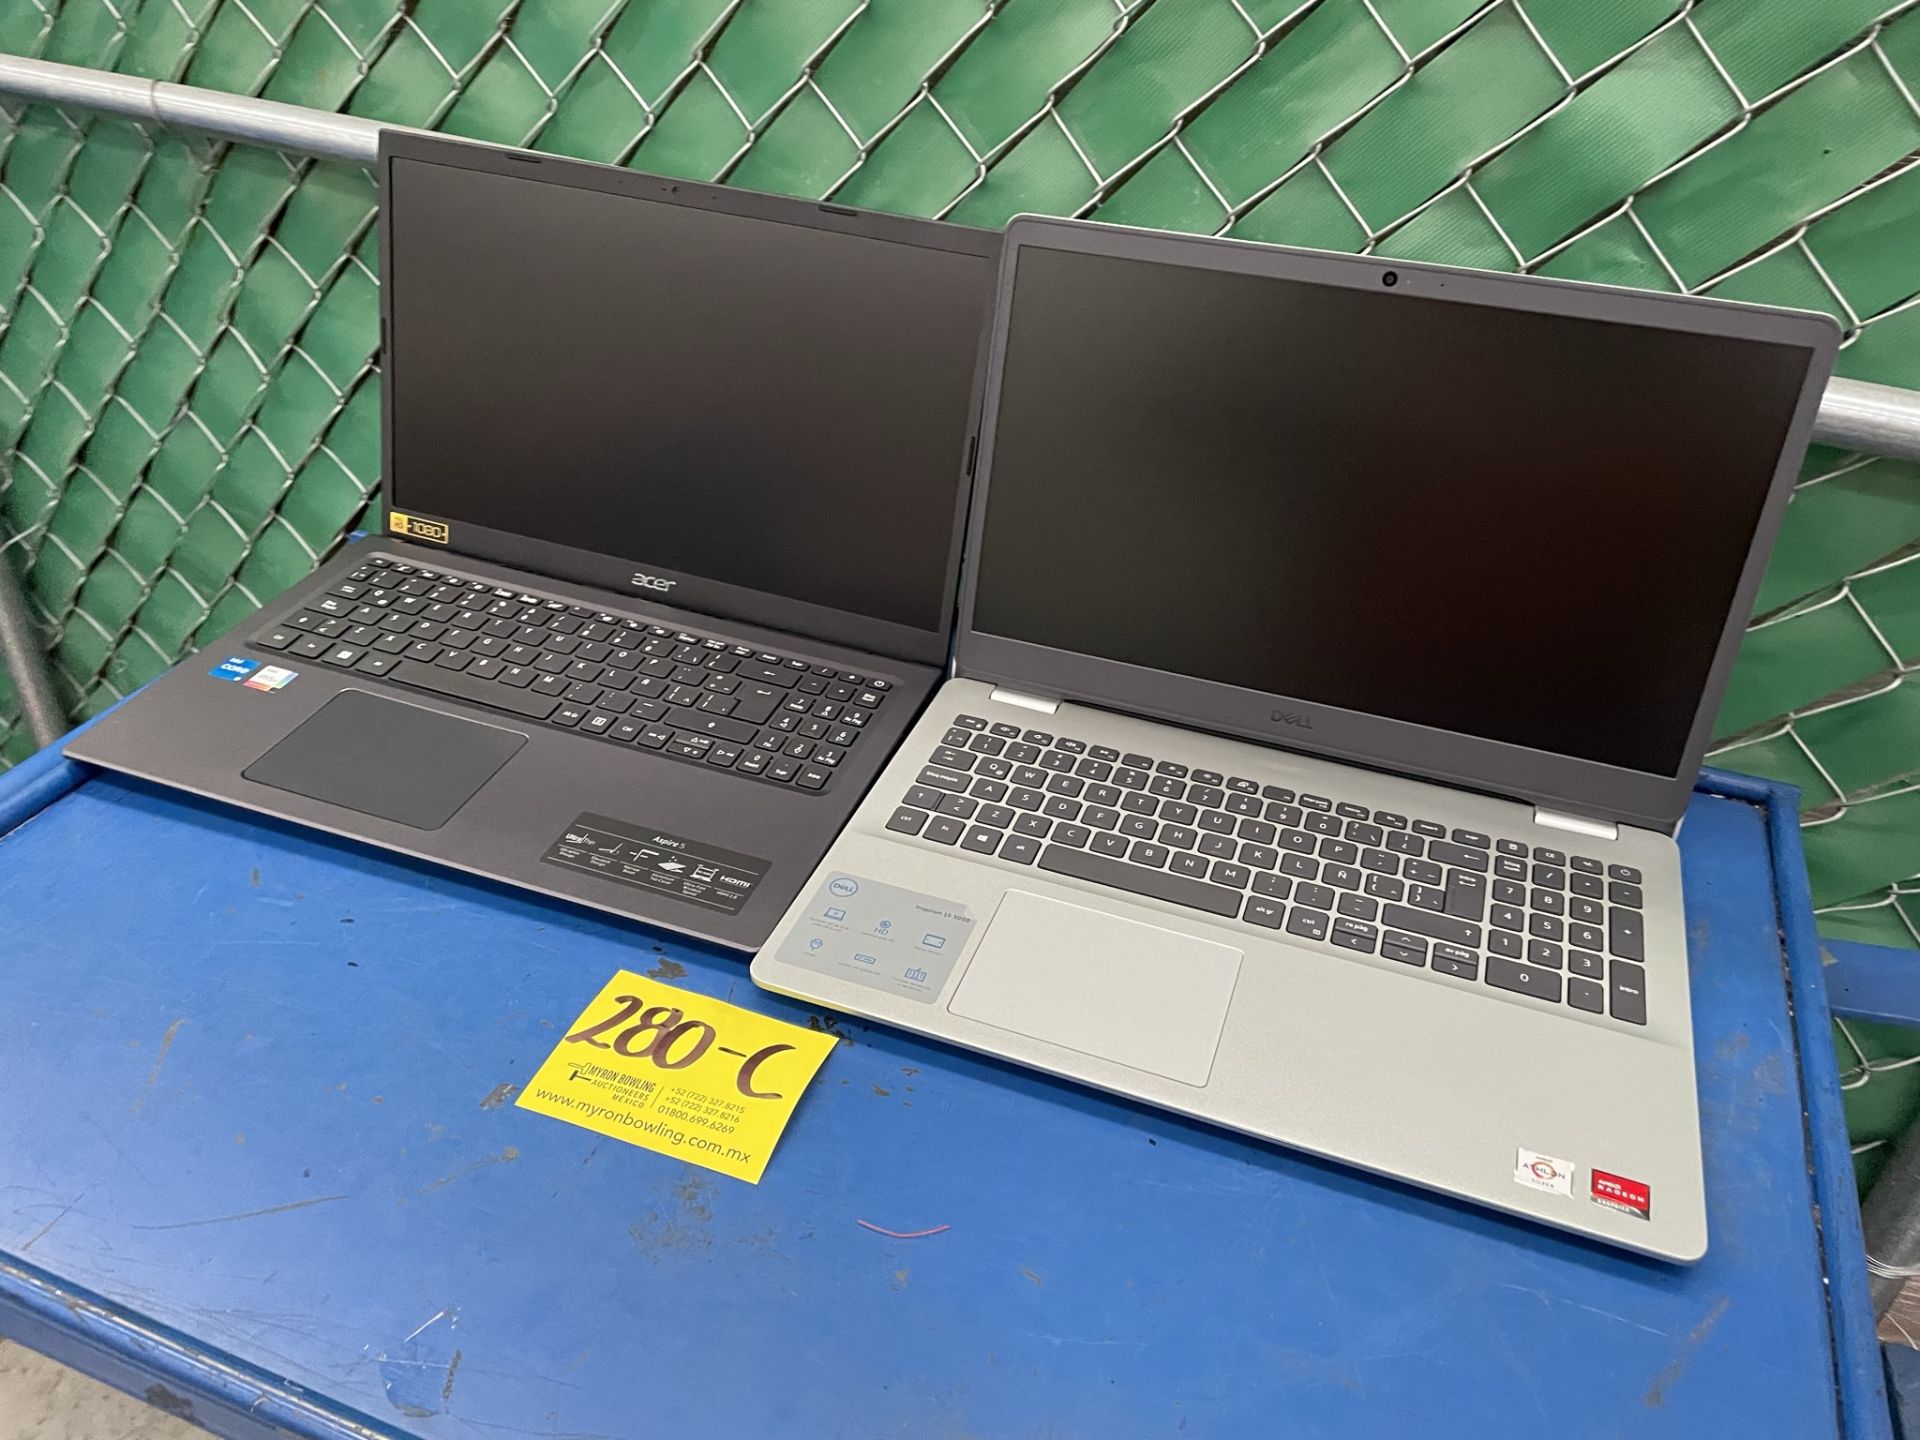 (EQUIPO NUEVO) Lote De 2 Laptops Contiene: 1 Laptop Marca DELL, Modelo I3505, Serie N/D, SO WINDOWS - Image 2 of 9